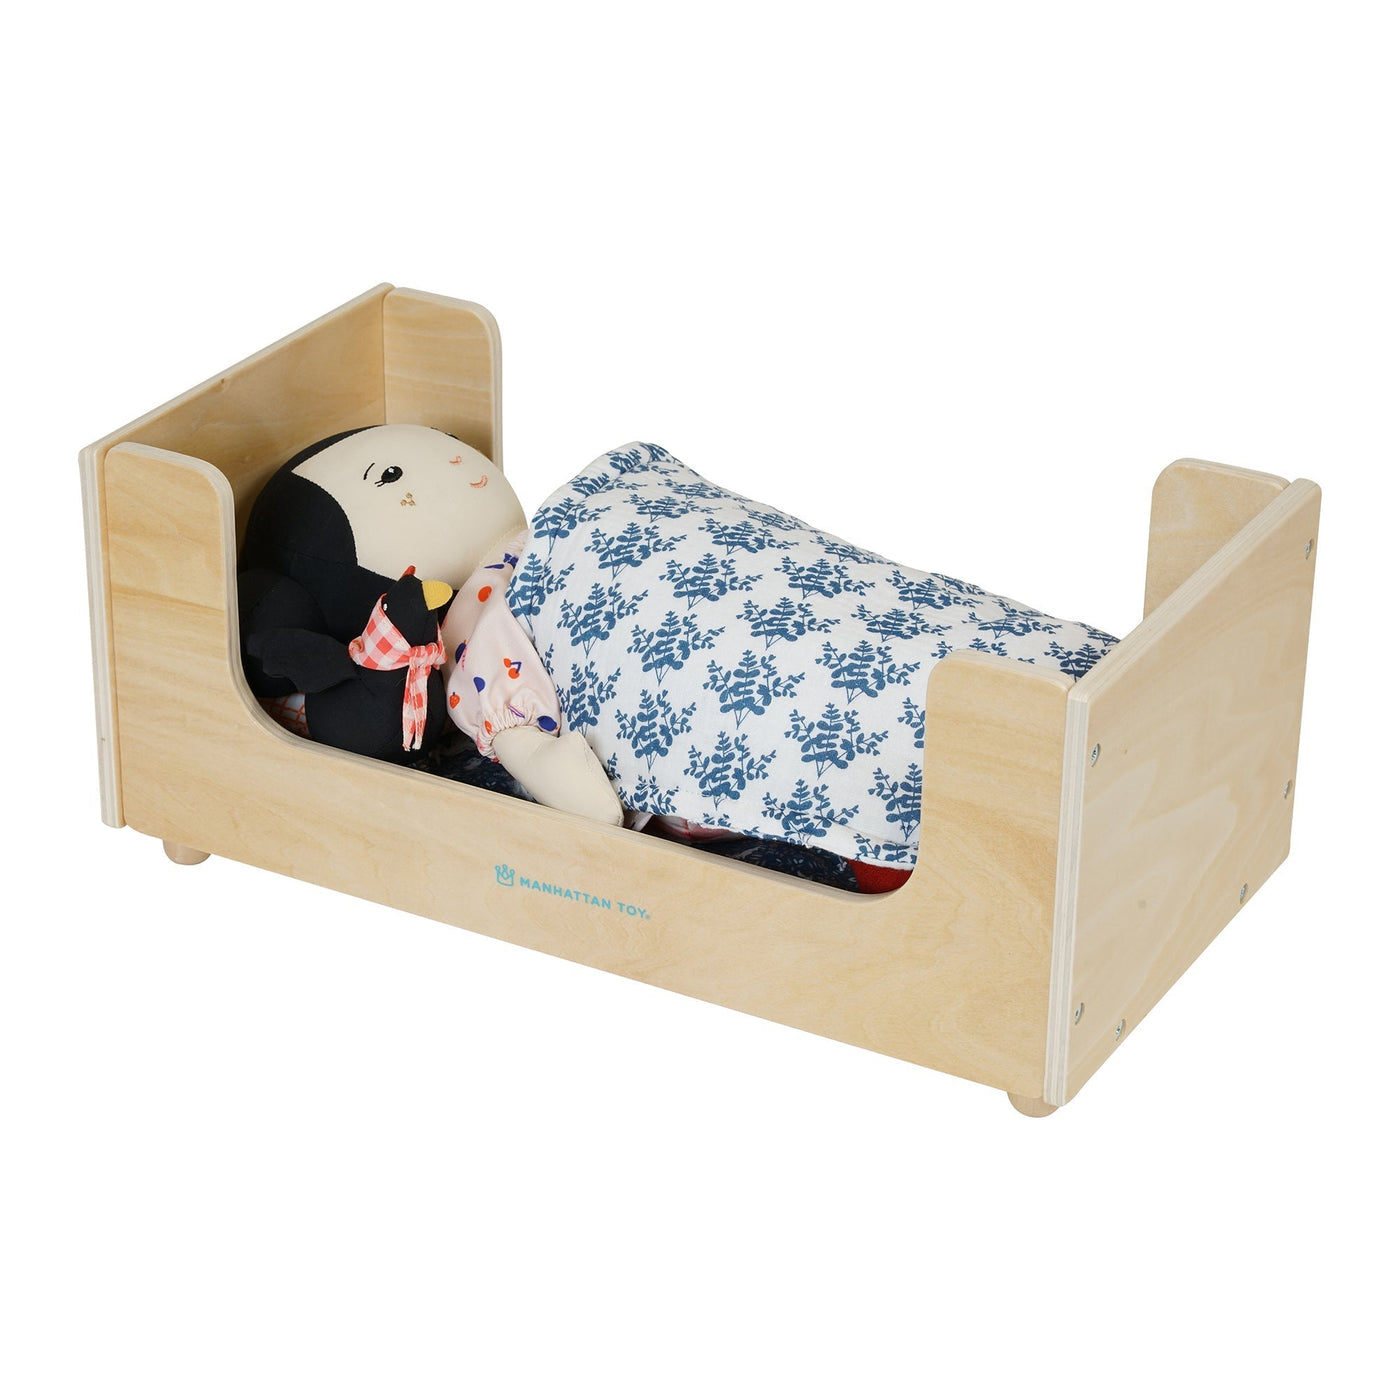 Sleep Tight Sleigh Bed by Manhattan Toy